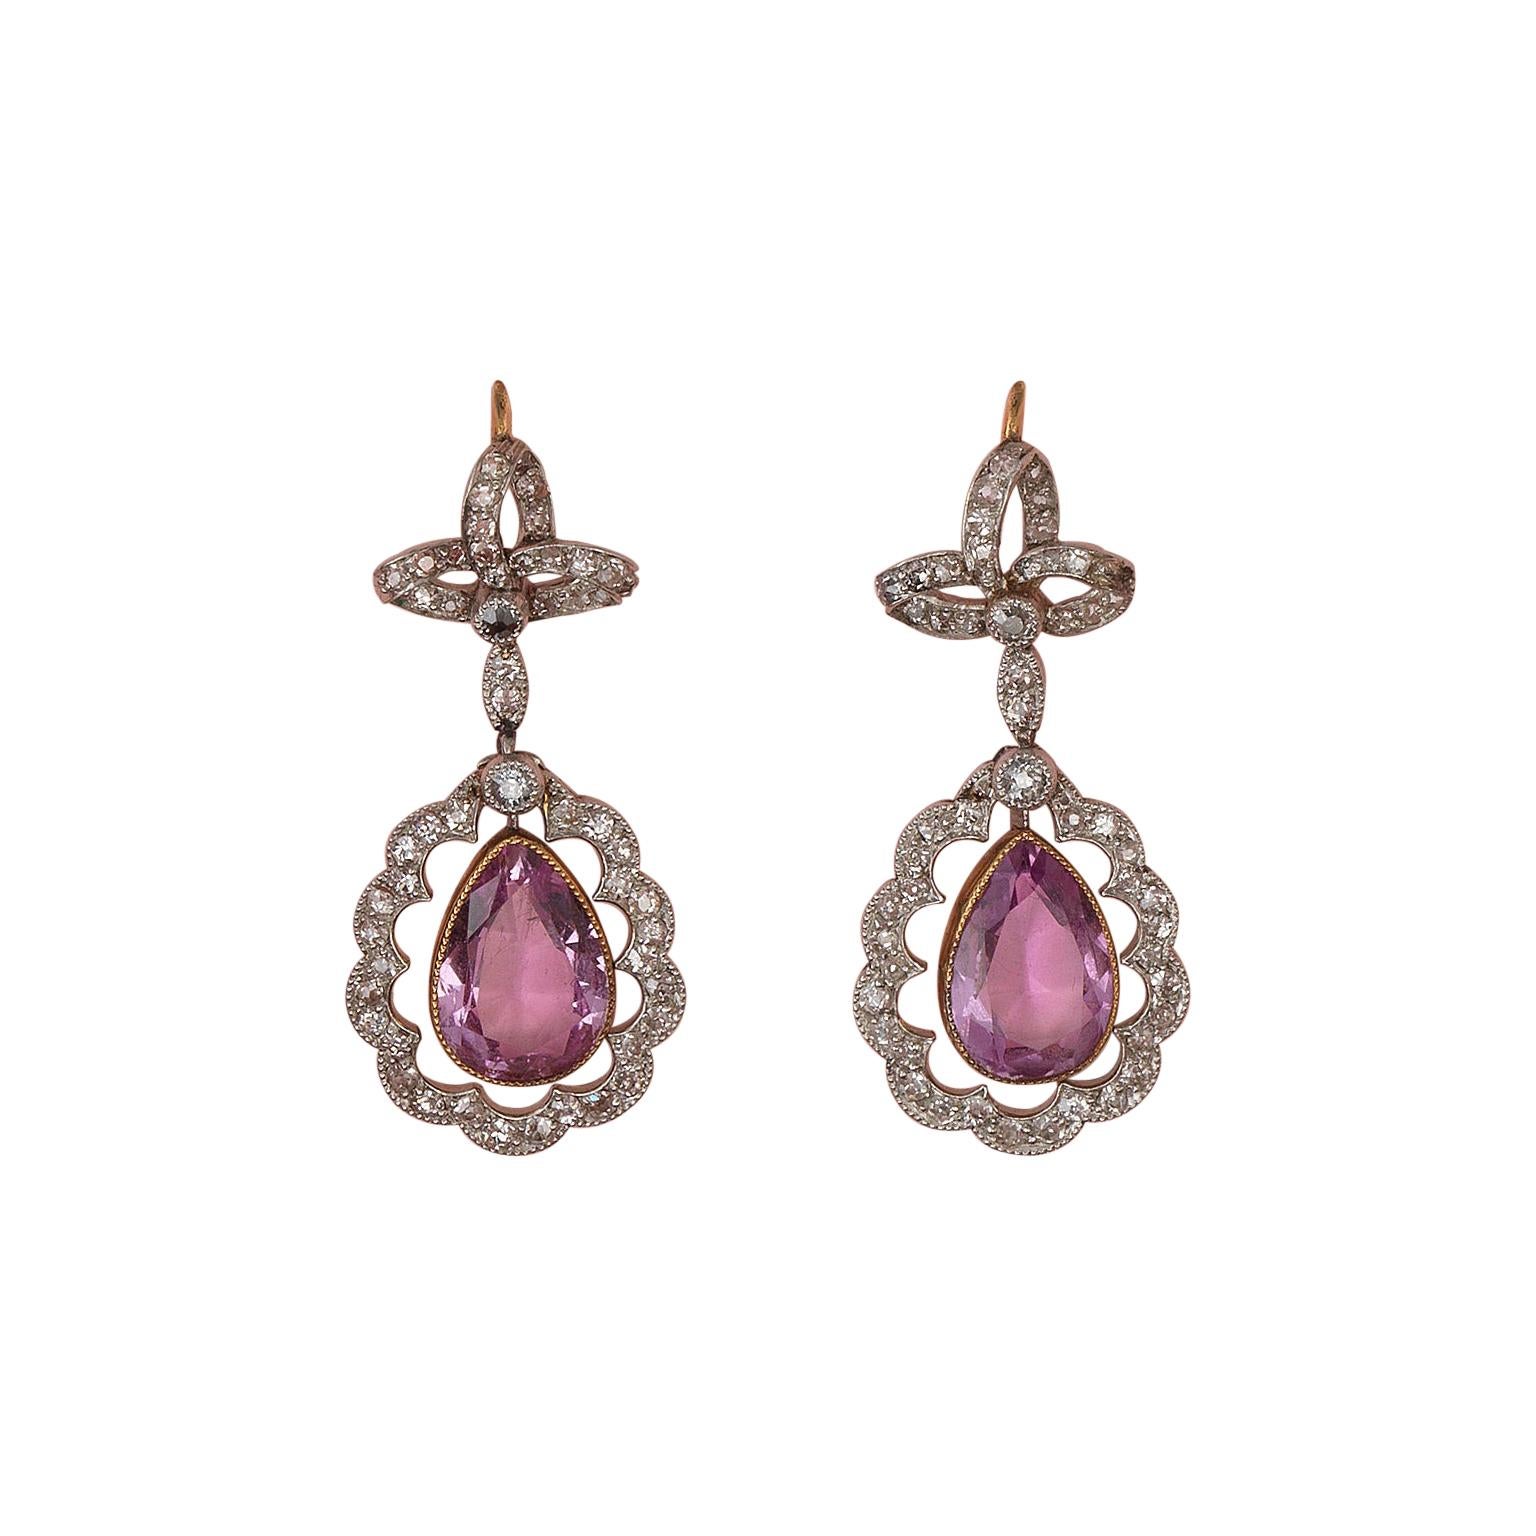 Edwardian Gold Diamond and Pink Topaz Earrings